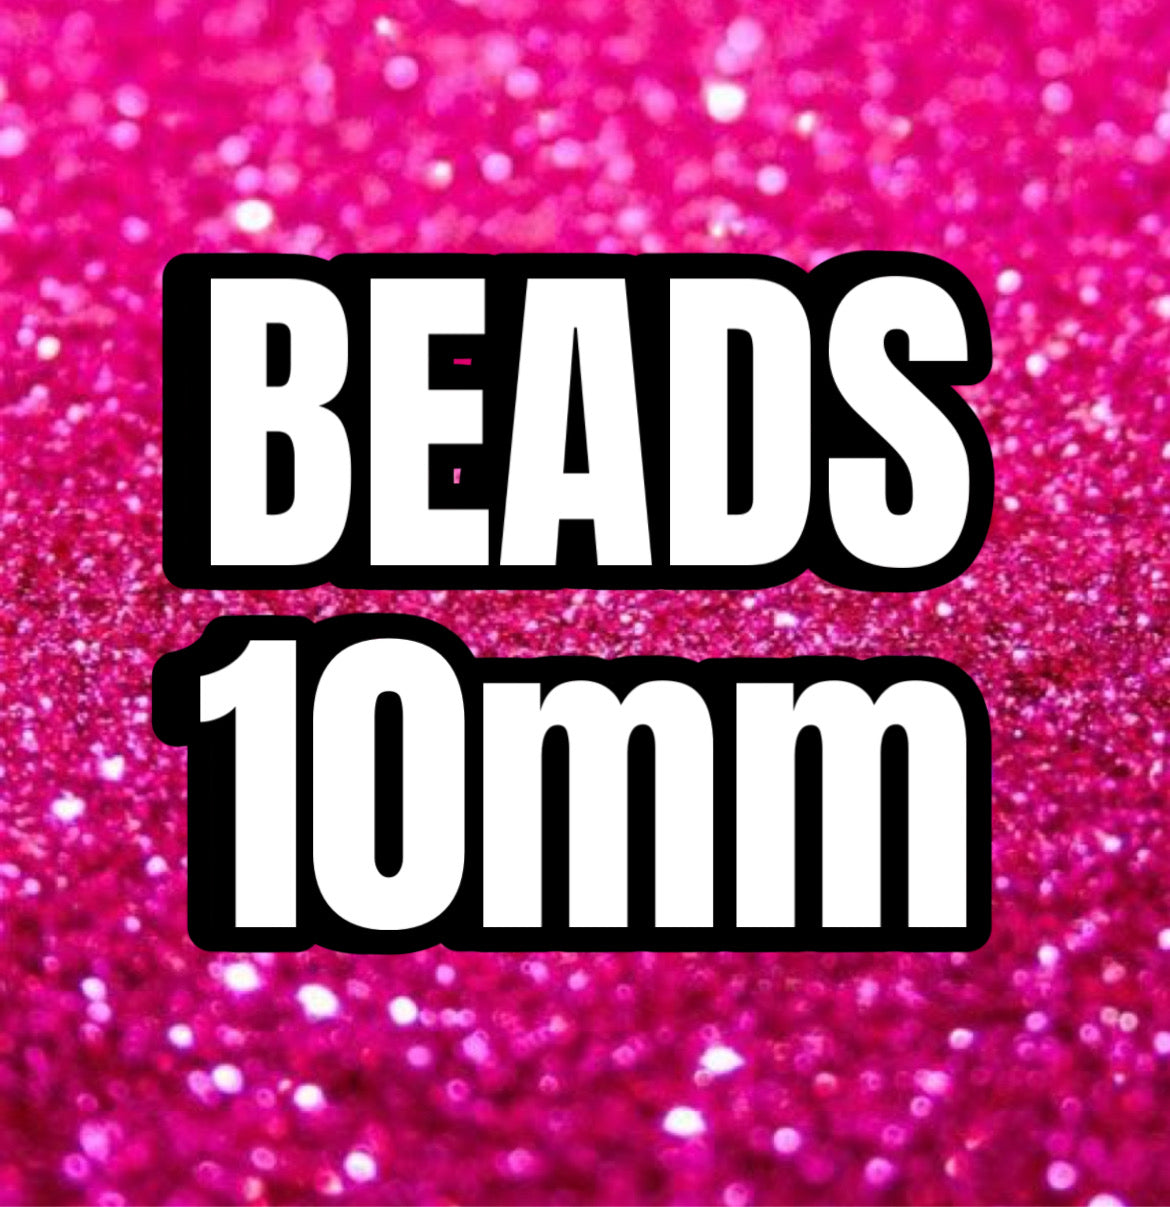 10mm Beads